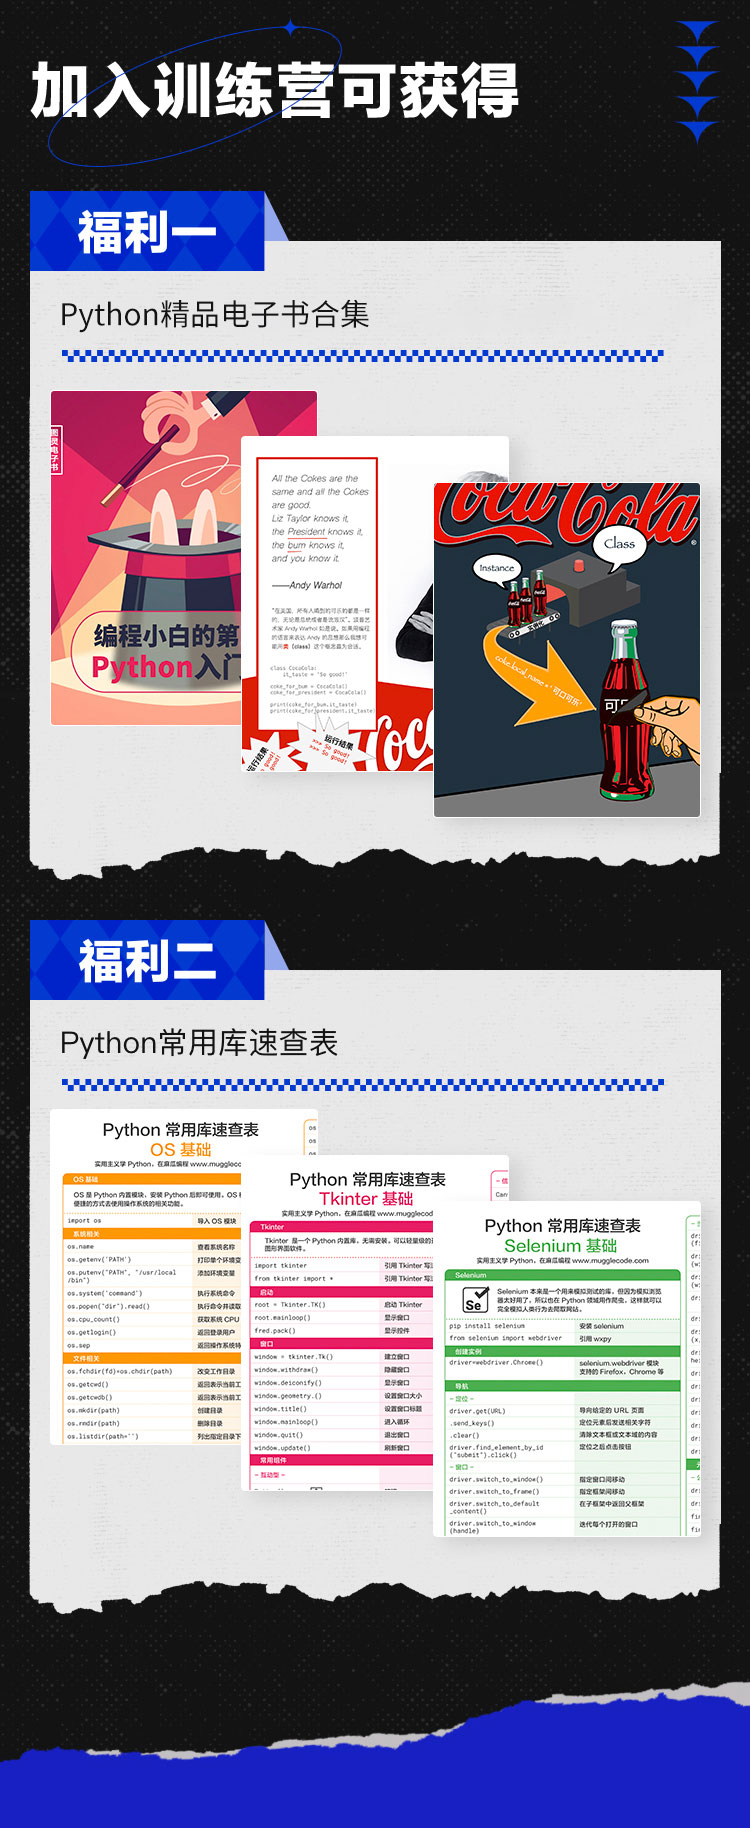 Python自动化训练营 (5).jpg